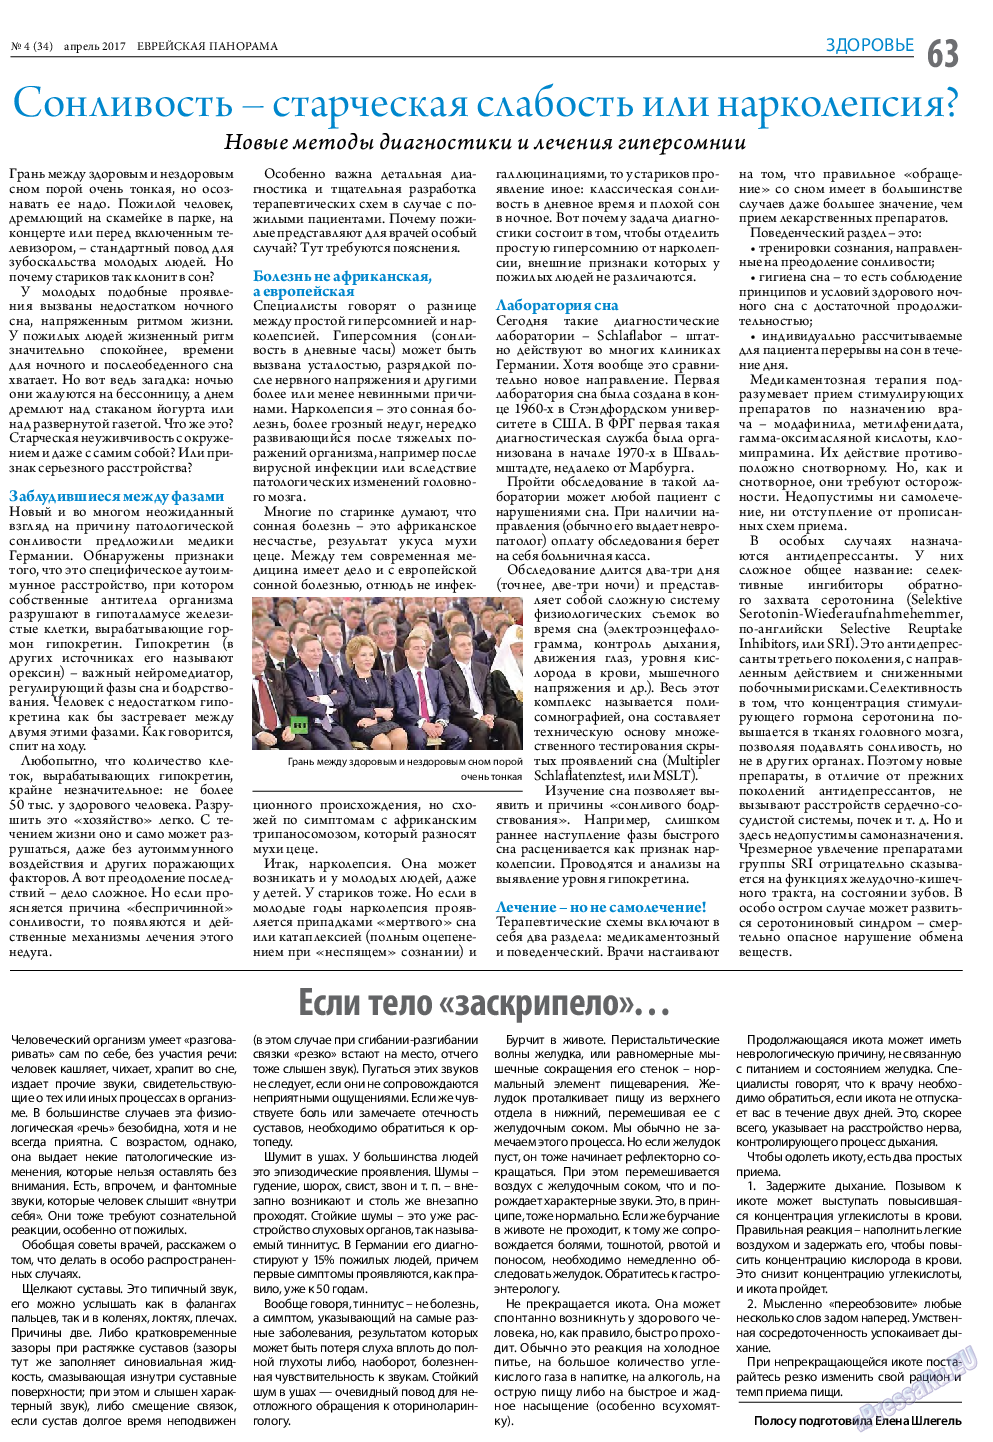 Еврейская панорама, газета. 2017 №4 стр.63